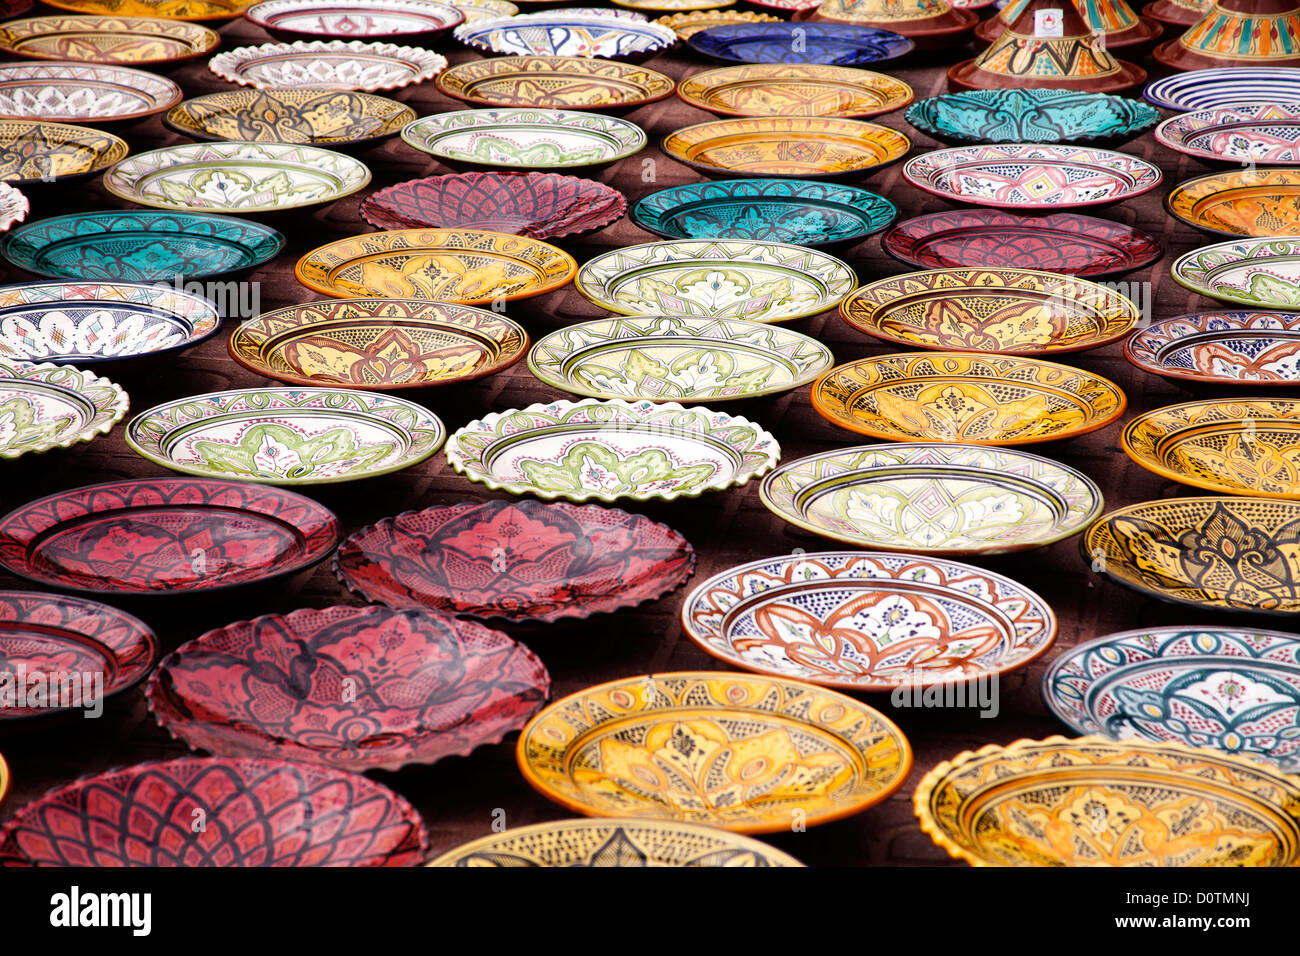 Morocco typical ceramic plates Stock Photo